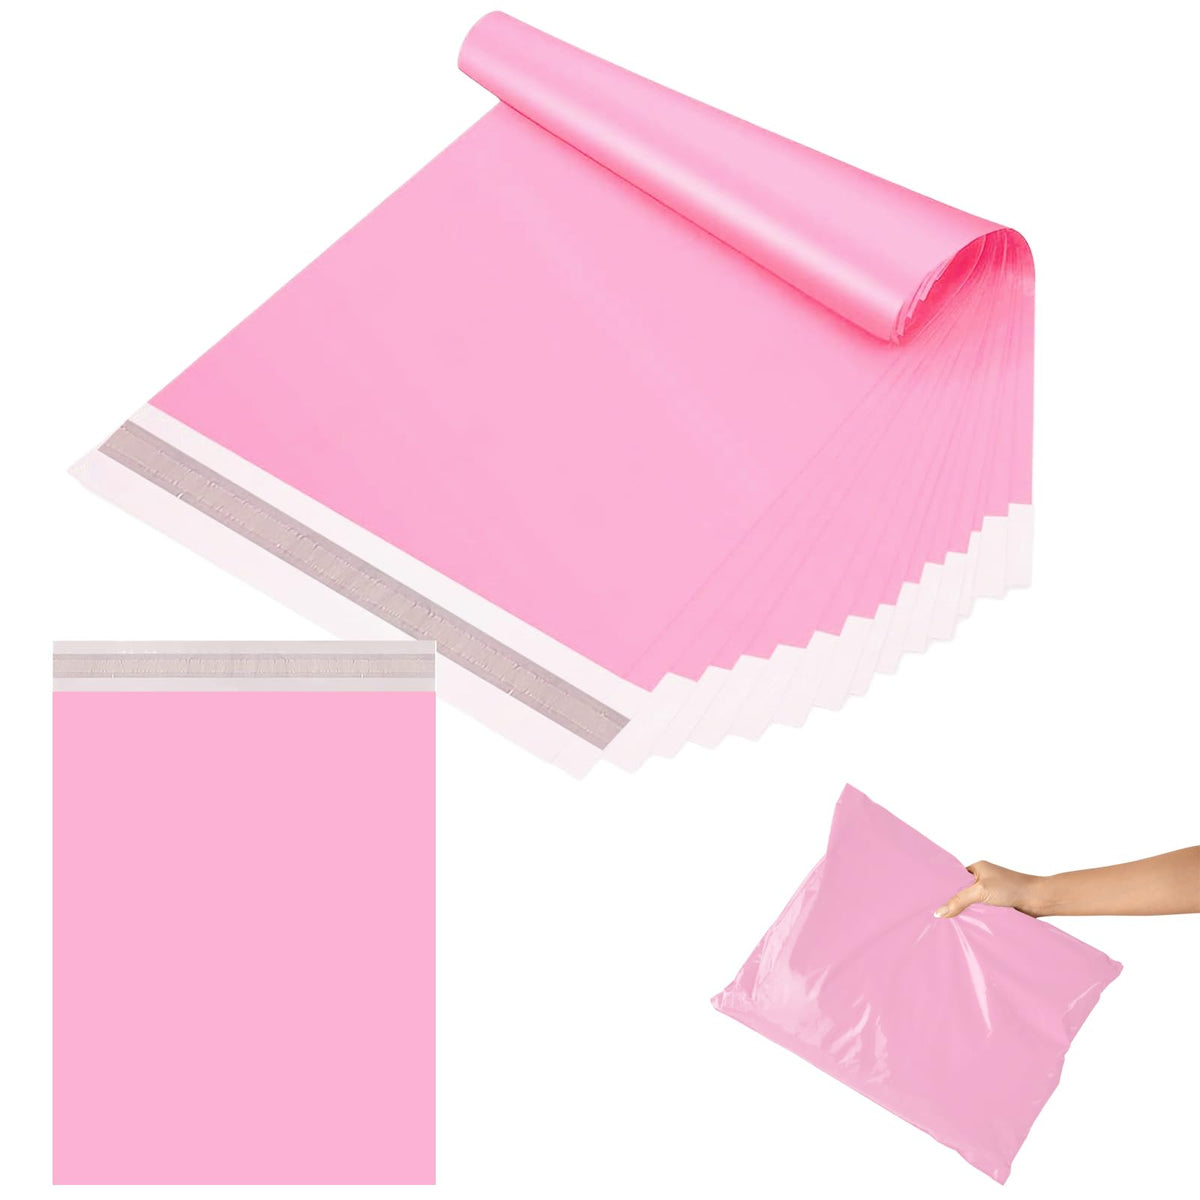 10PCS Mailing Bags Pink Vinted Postage Bags Postal Self Seal Bags 24” x 28” (60x70cm) Parcel Bags Parcel Shipping Bags Parcel Delivery Bags,Extra Large Mailing Bags for Large Parcels Posting Clothes